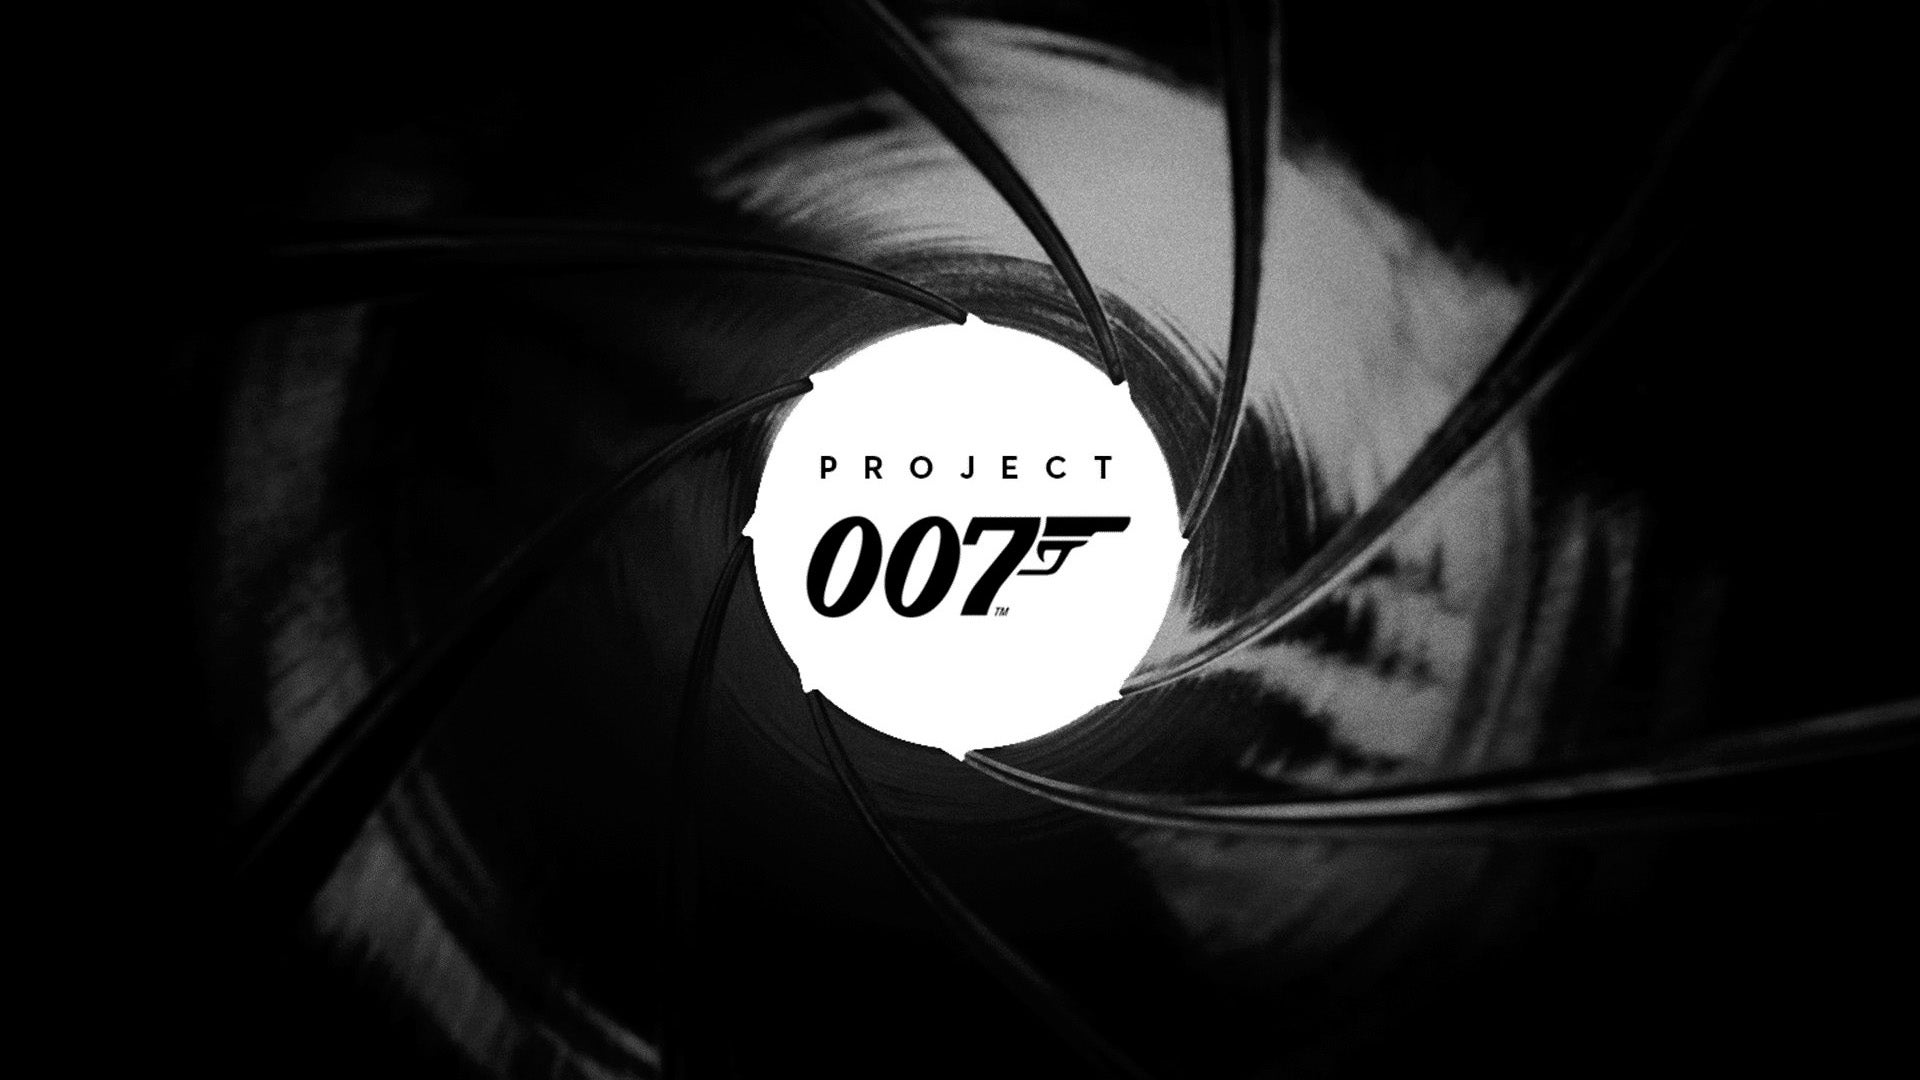 As Hitman takes a hiatus, IO Interactive shares details of its James Bond game